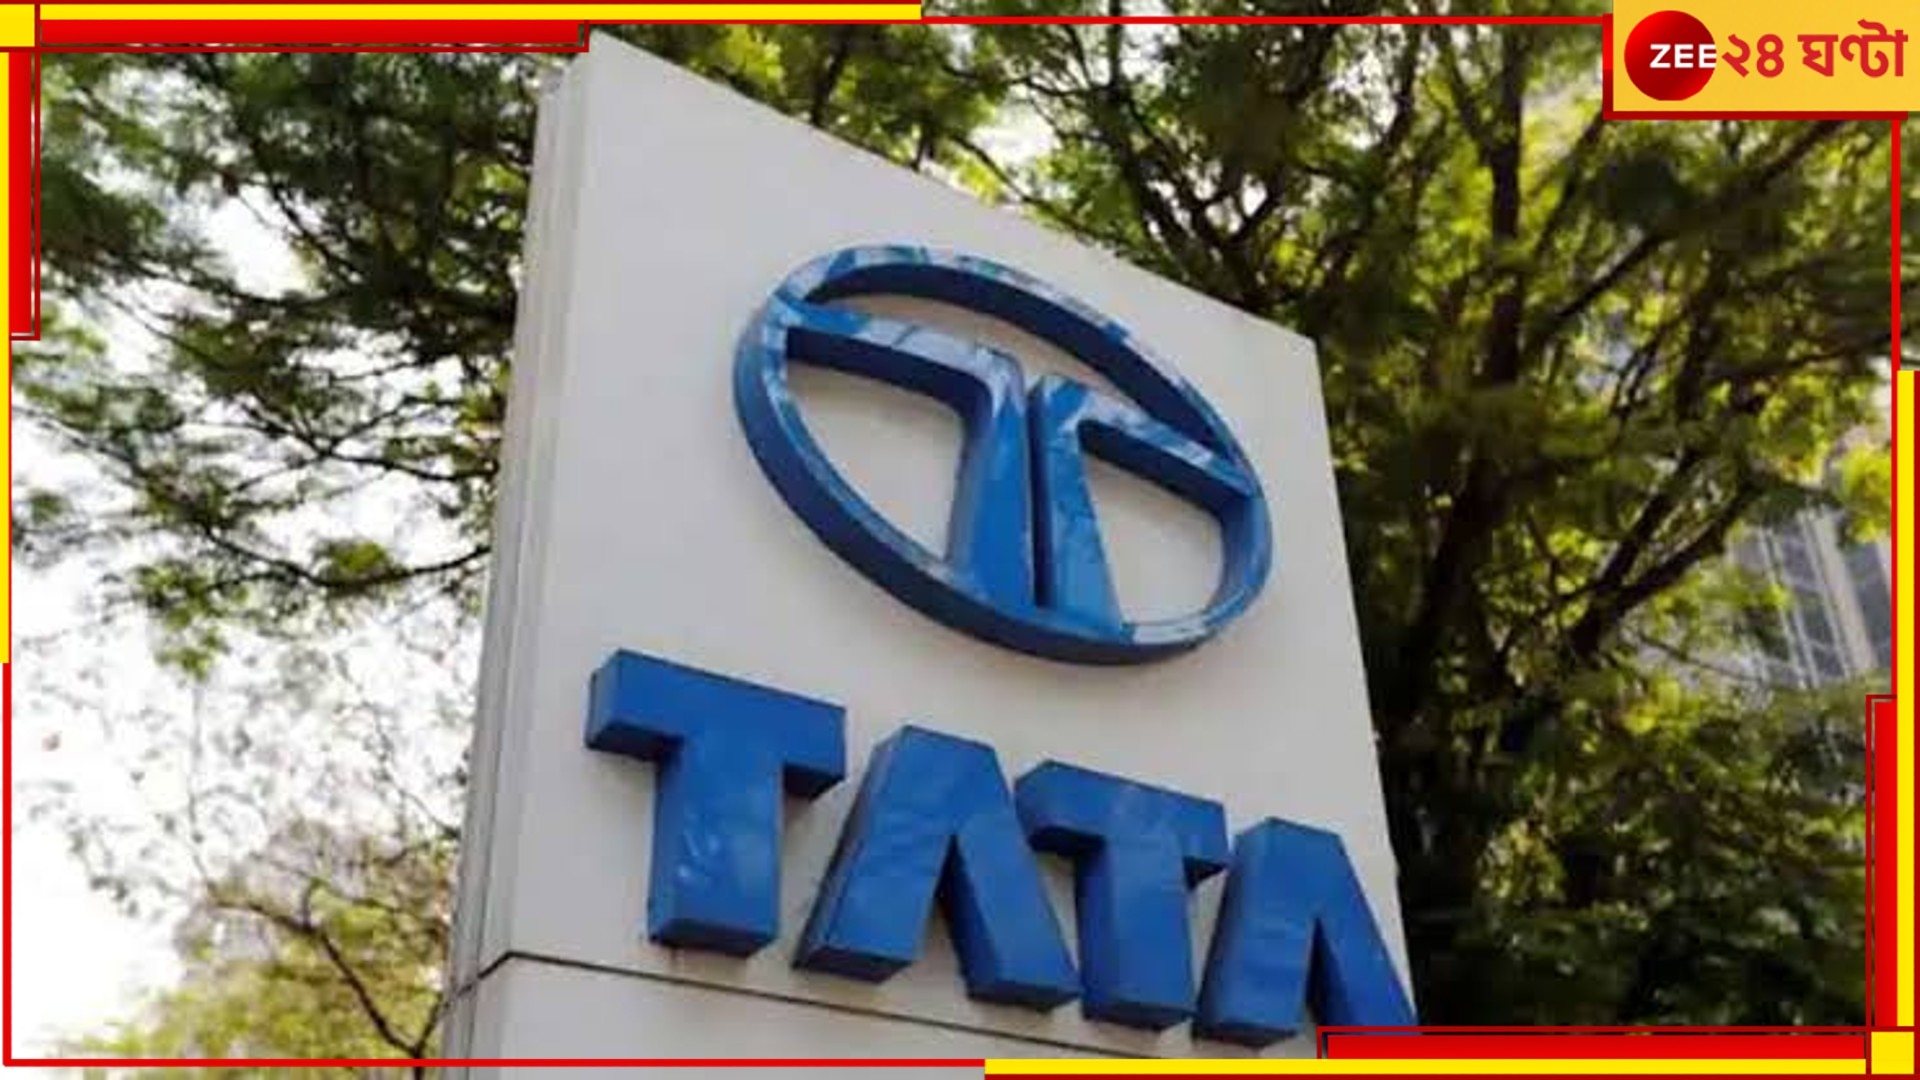 Tata Group: ৩০ লক্ষ কোটি টাকার মূলধন! পাক অর্থনীতিকে ছাপিয়ে গেল টাটা 